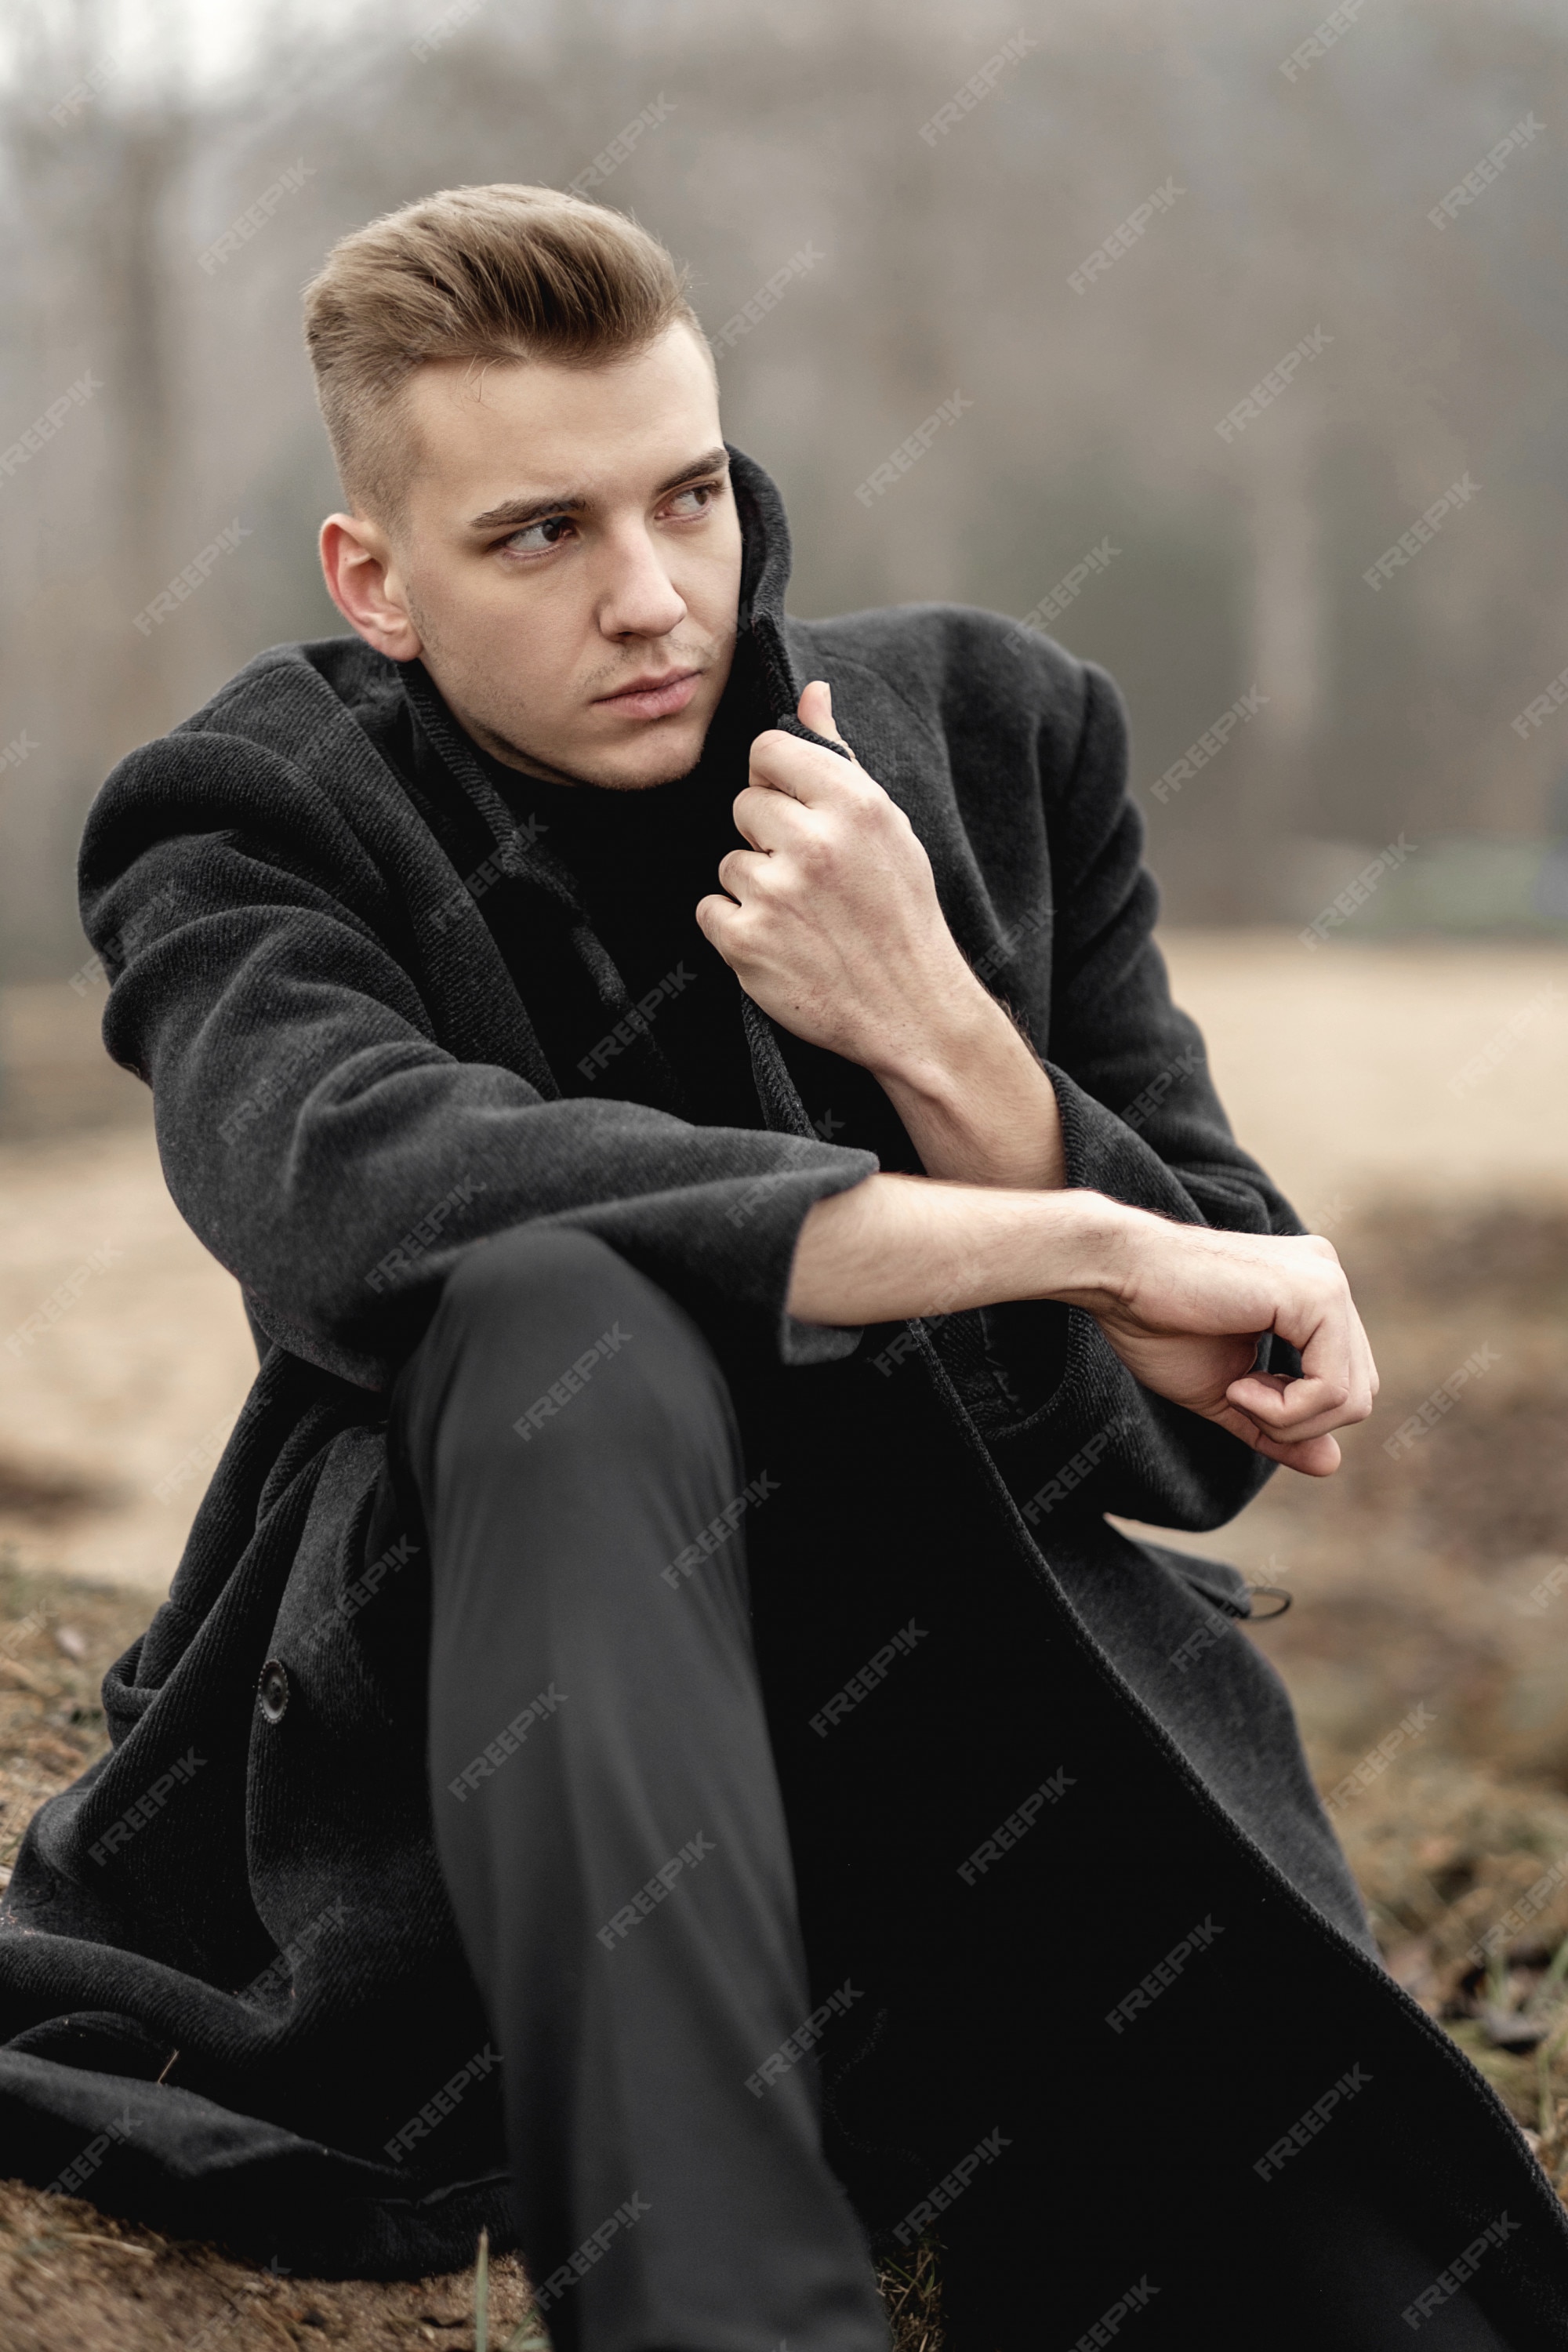 Modelo masculino de moda en abrigo, clima frío, retrato artístico del hombre  | Foto Premium